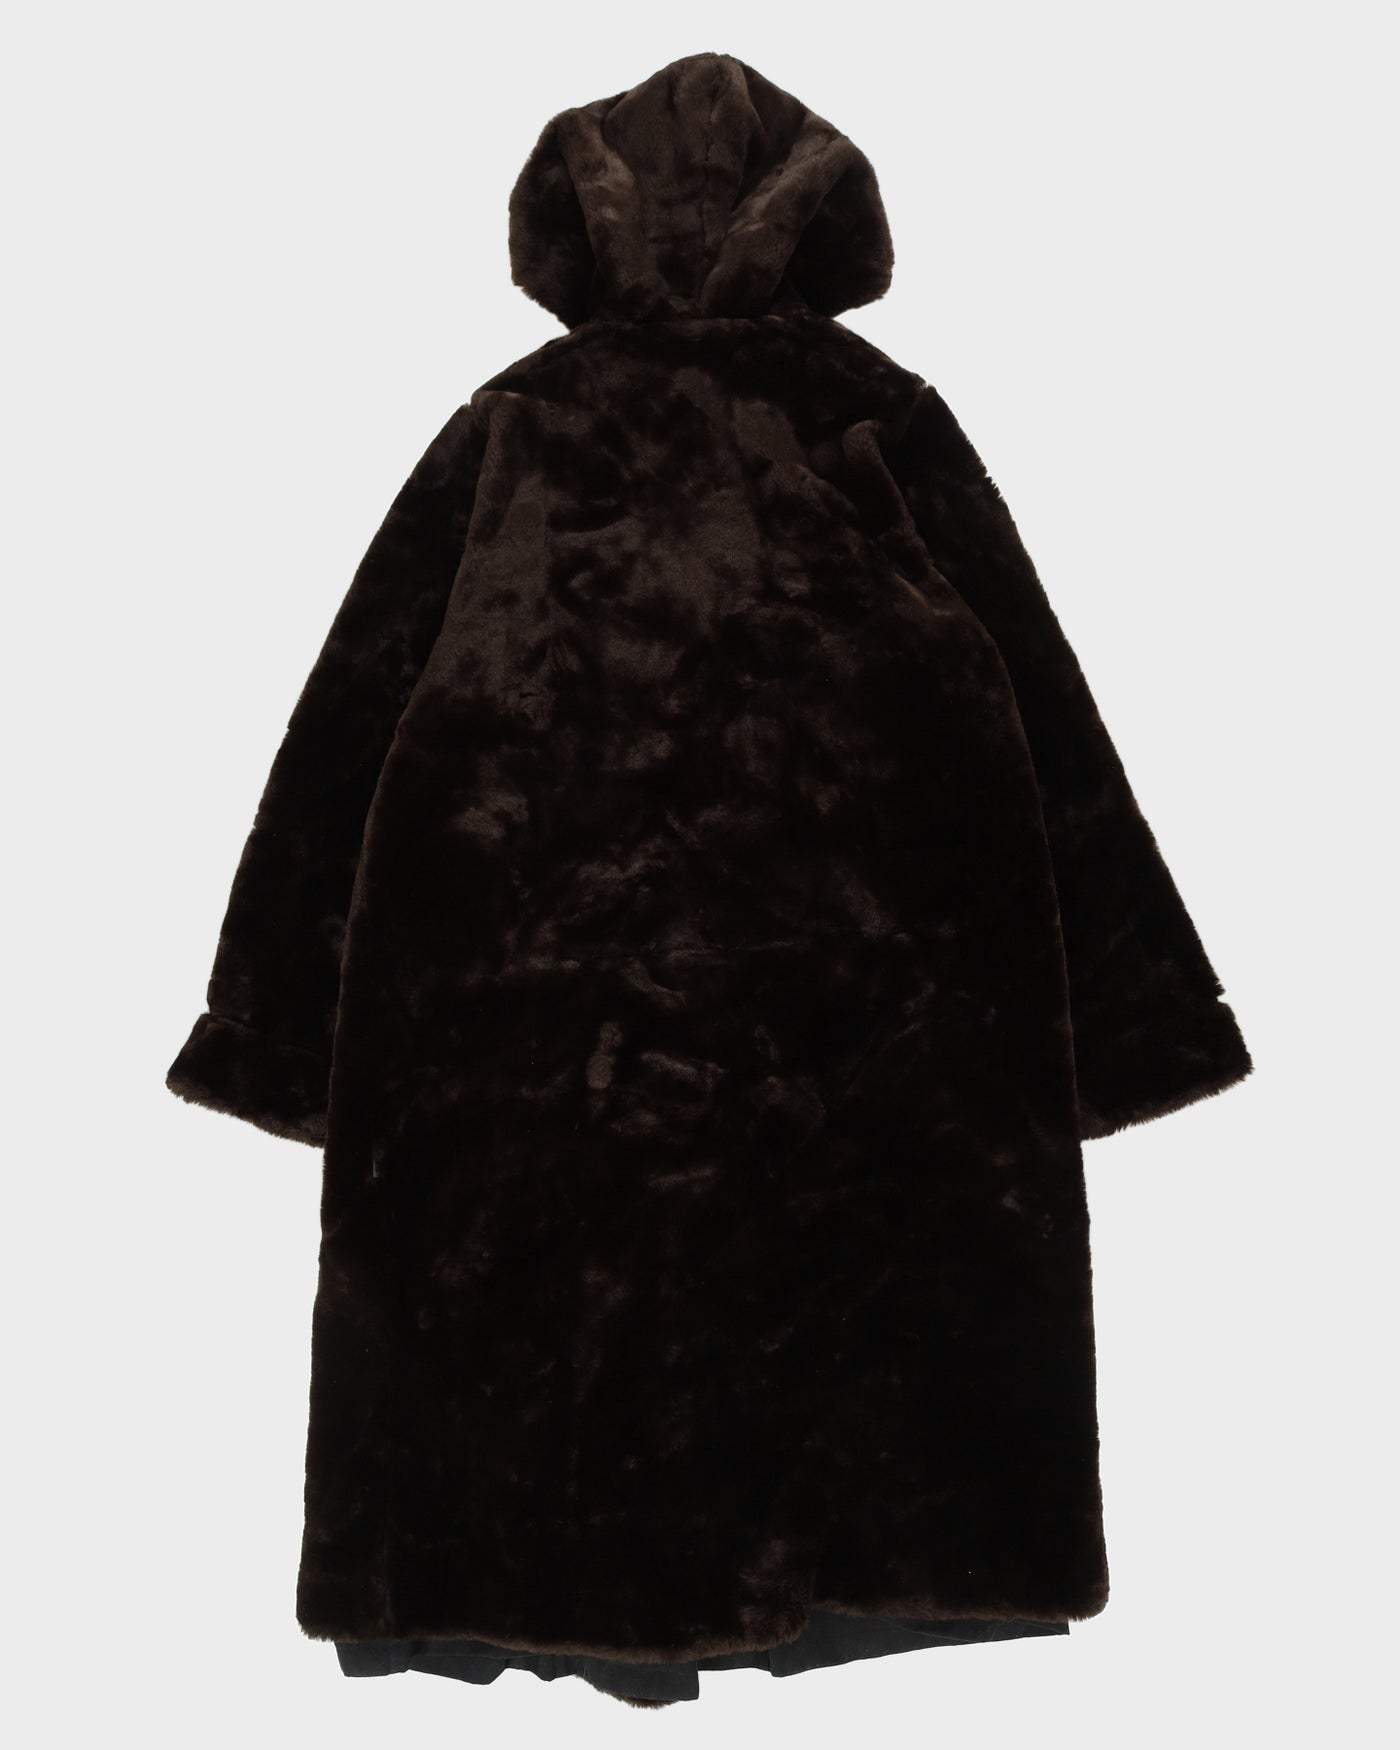 London Fog Brown Faux Fur Hooded Coat - XL